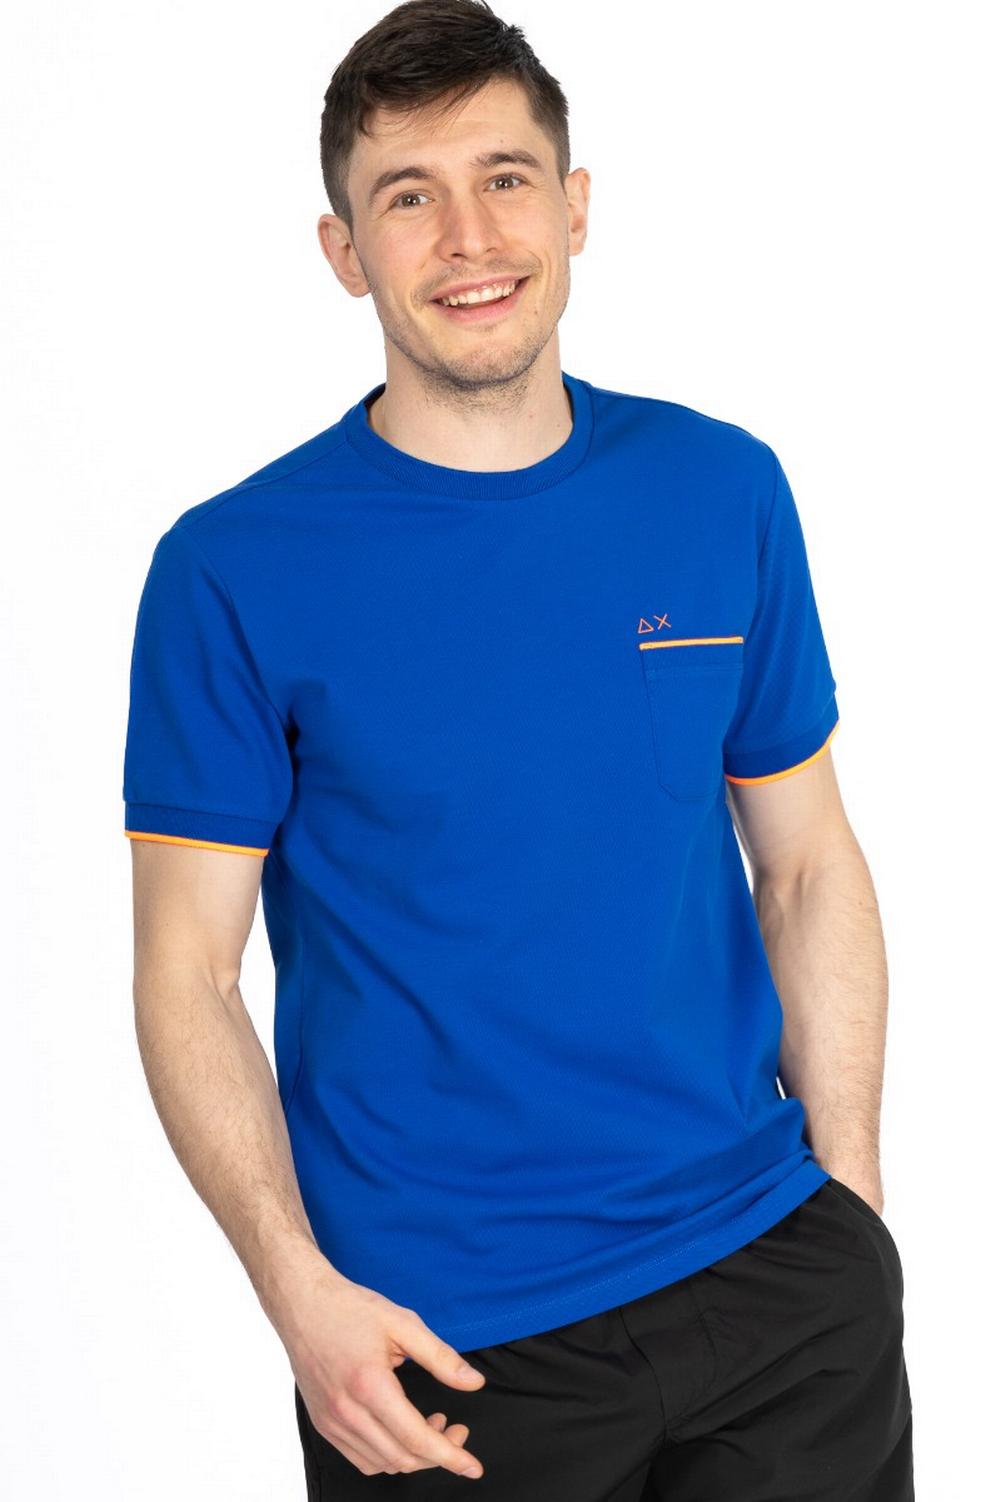 Sun 68 - T-Shirt Profilo Fluo Blu Royal - T33121